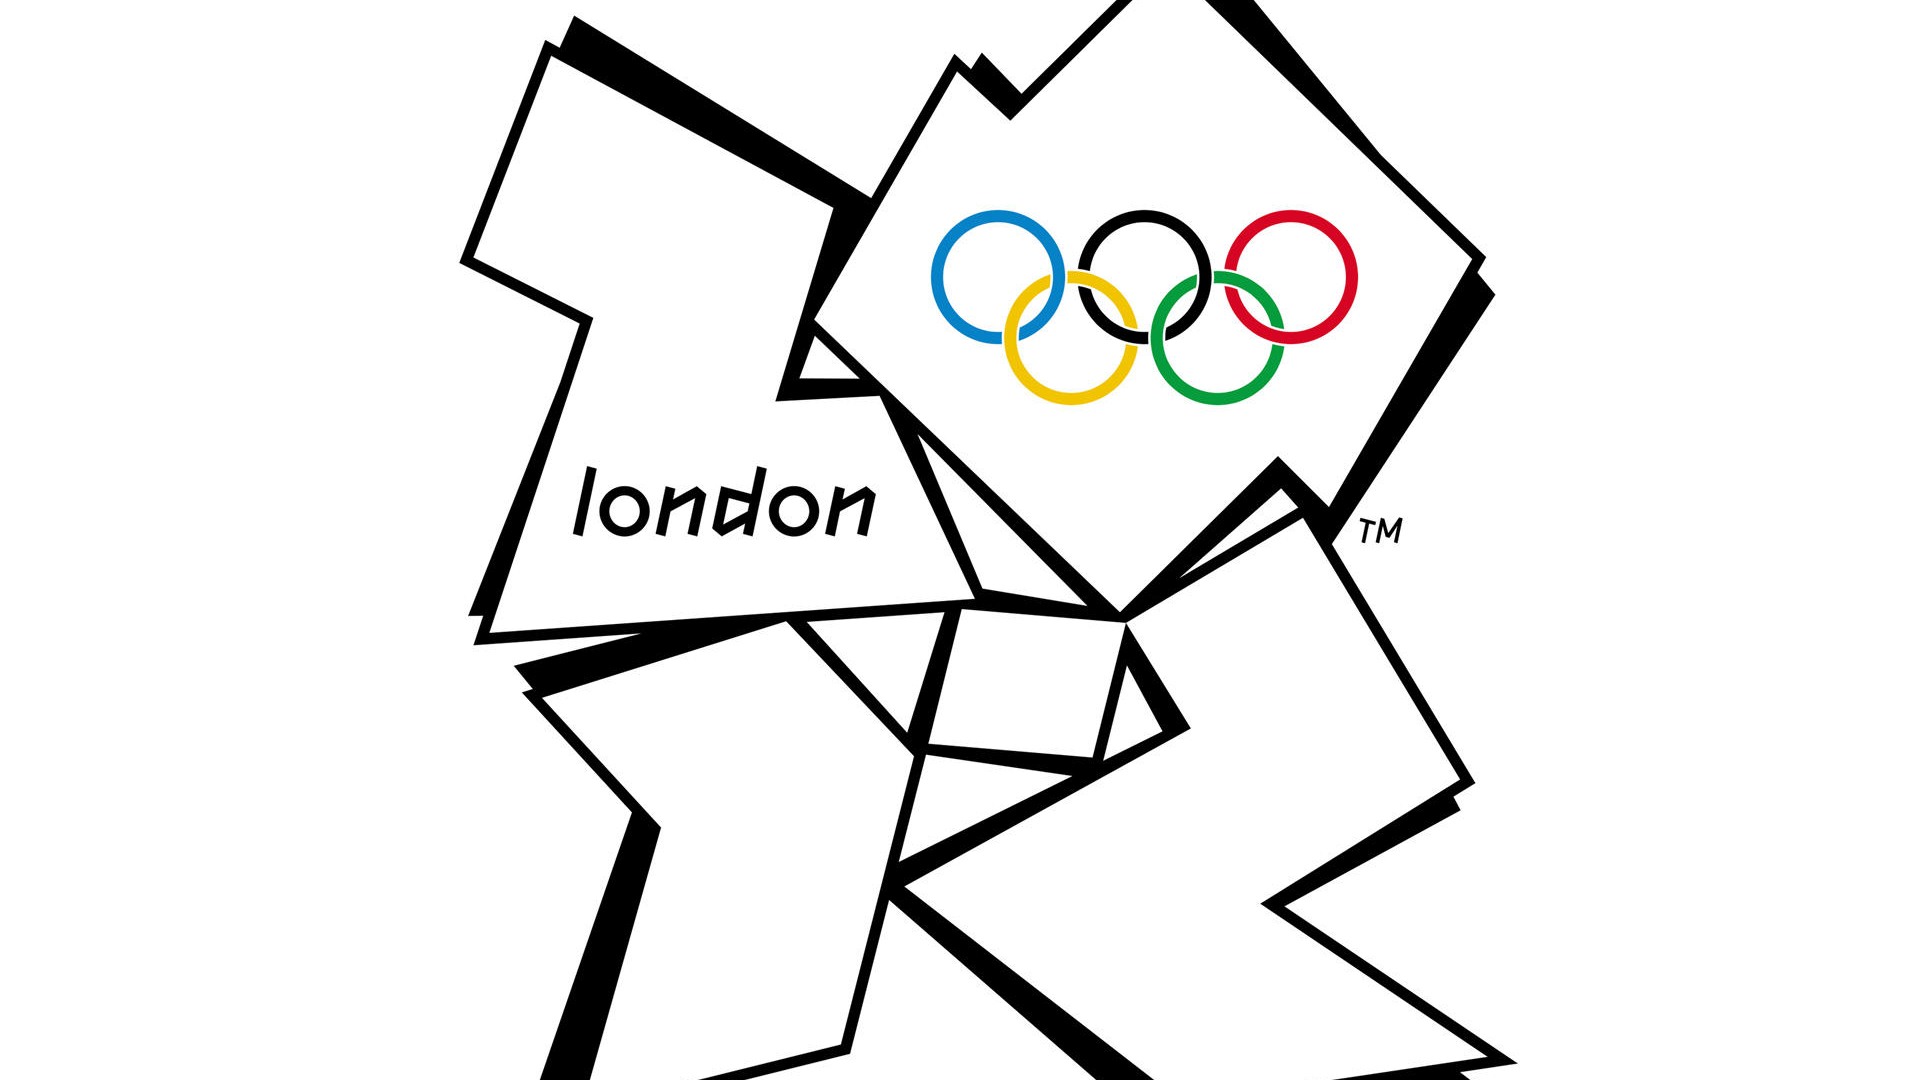 London 2012 Olympics theme wallpapers (2) #14 - 1920x1080